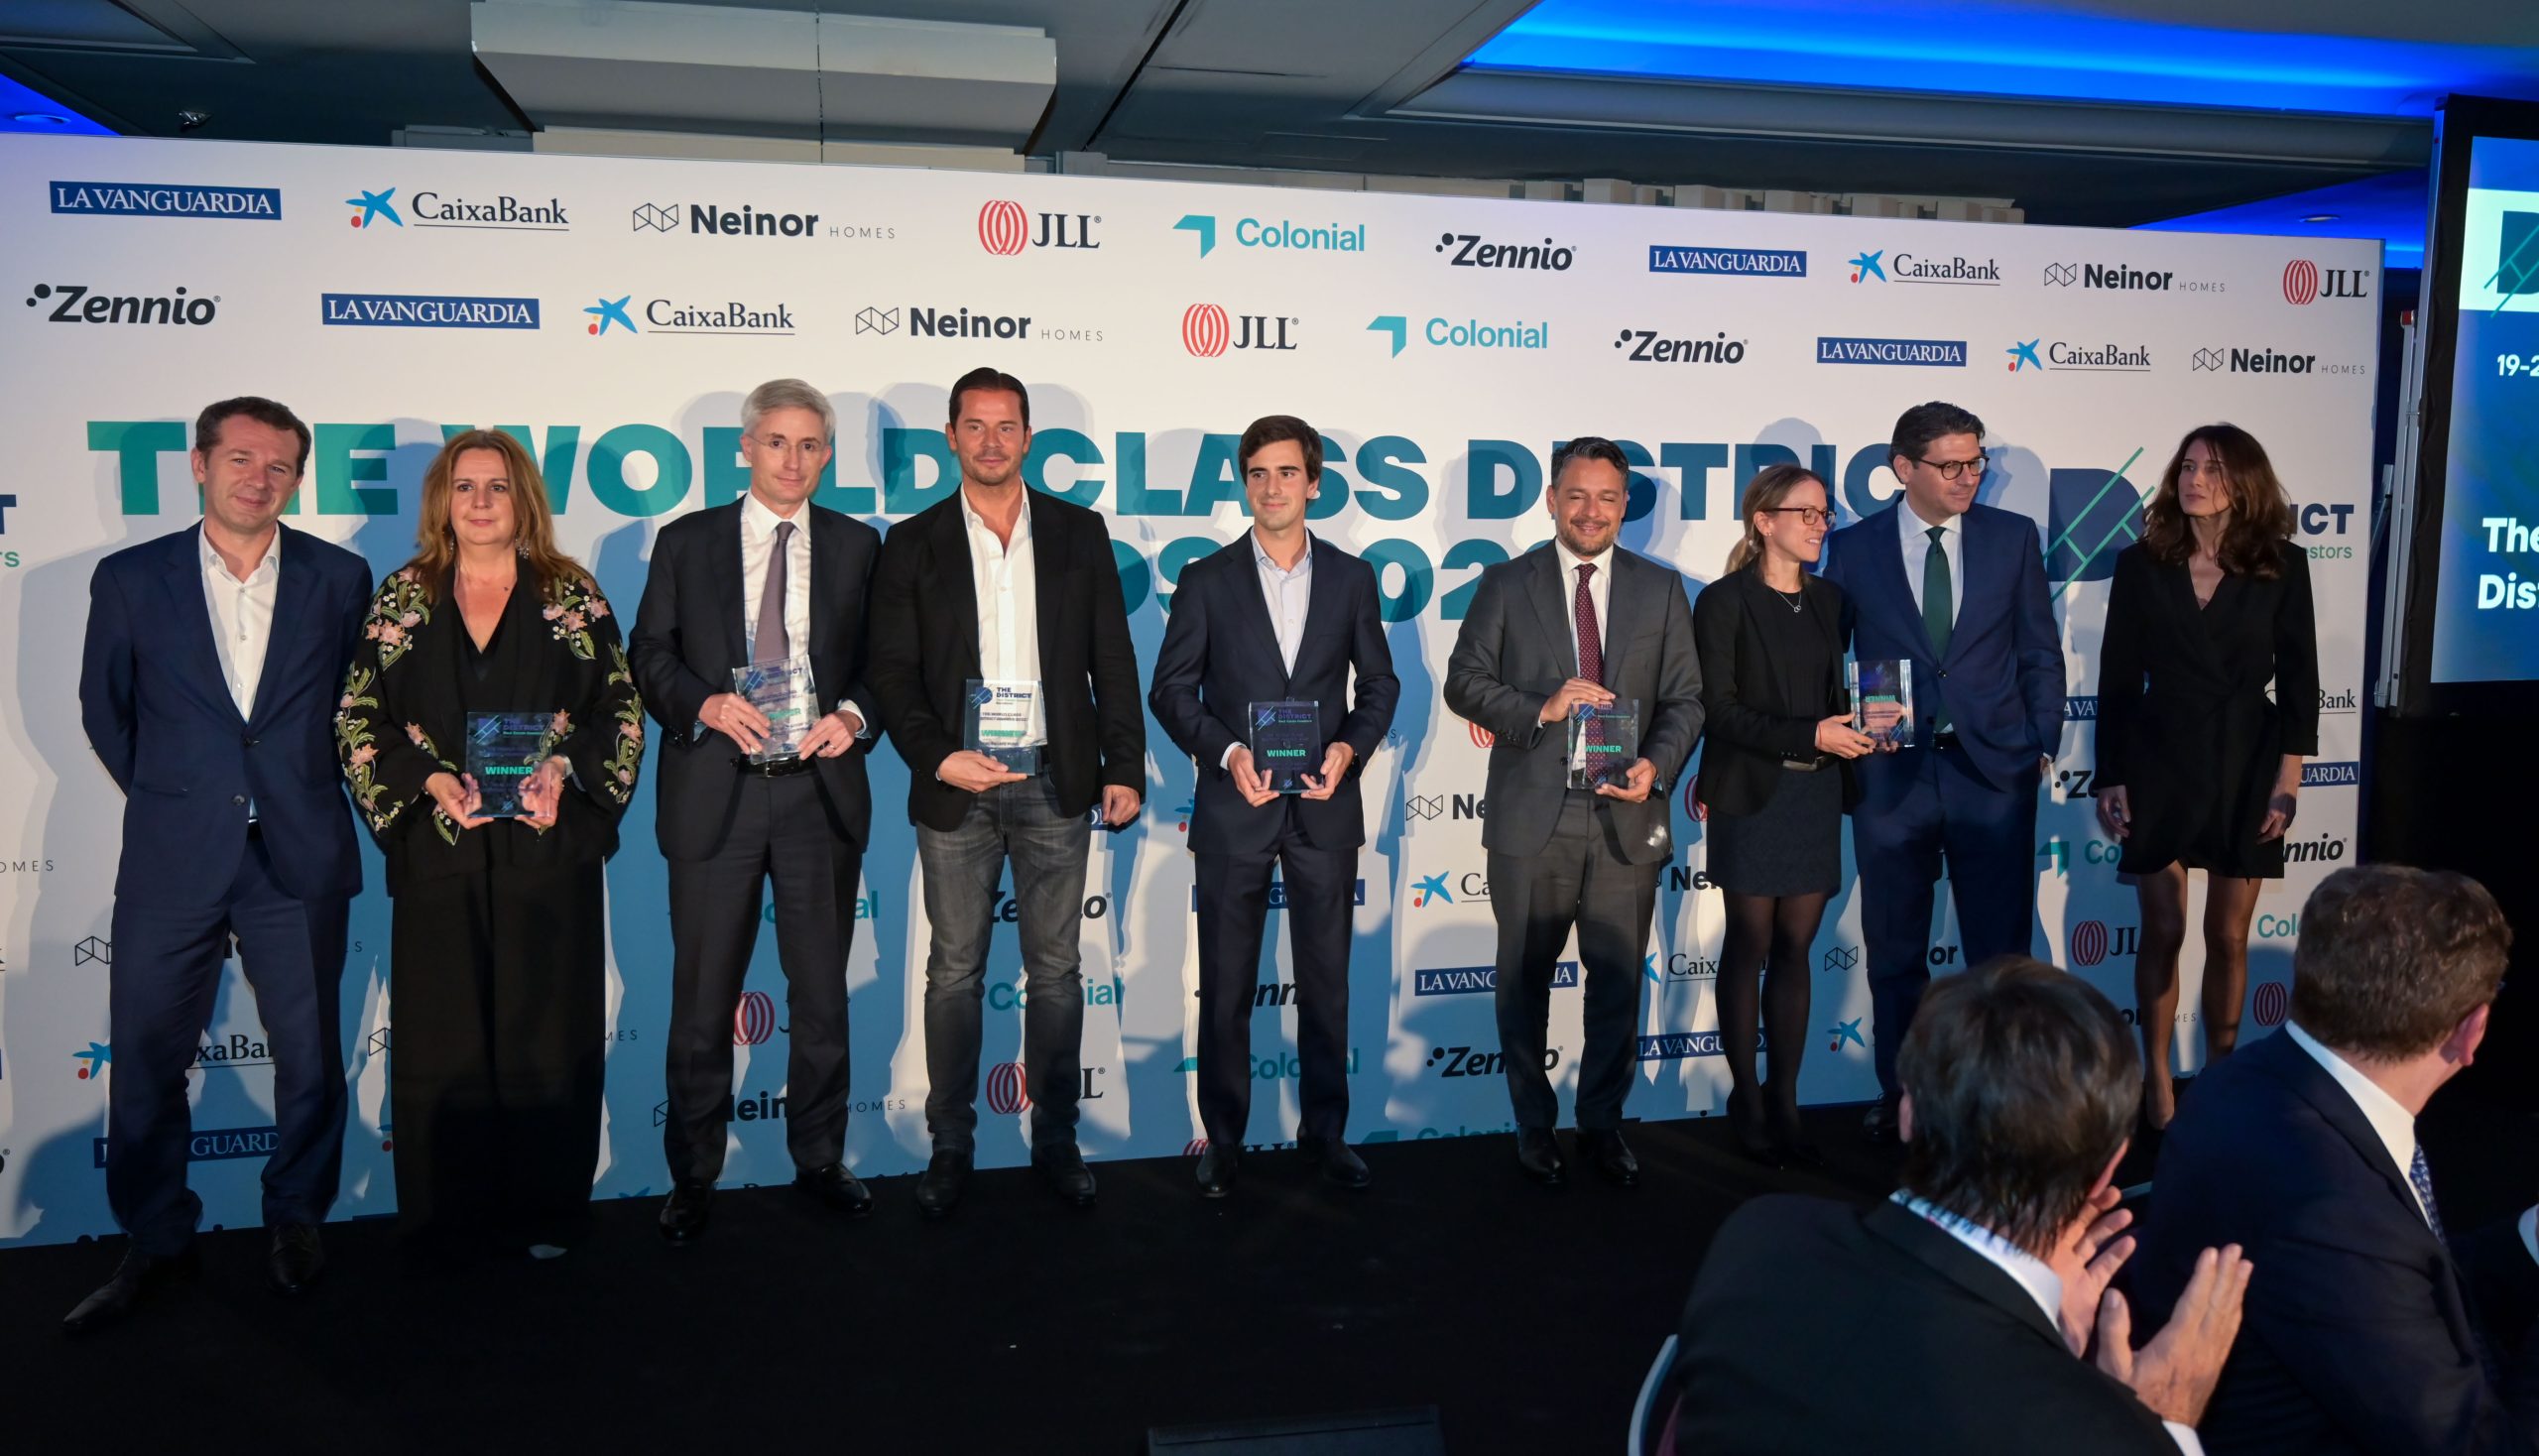 Greystar, TPG, Servihabitat, Málaga y Brickbro se alzan con los The World Class District Awards 2022